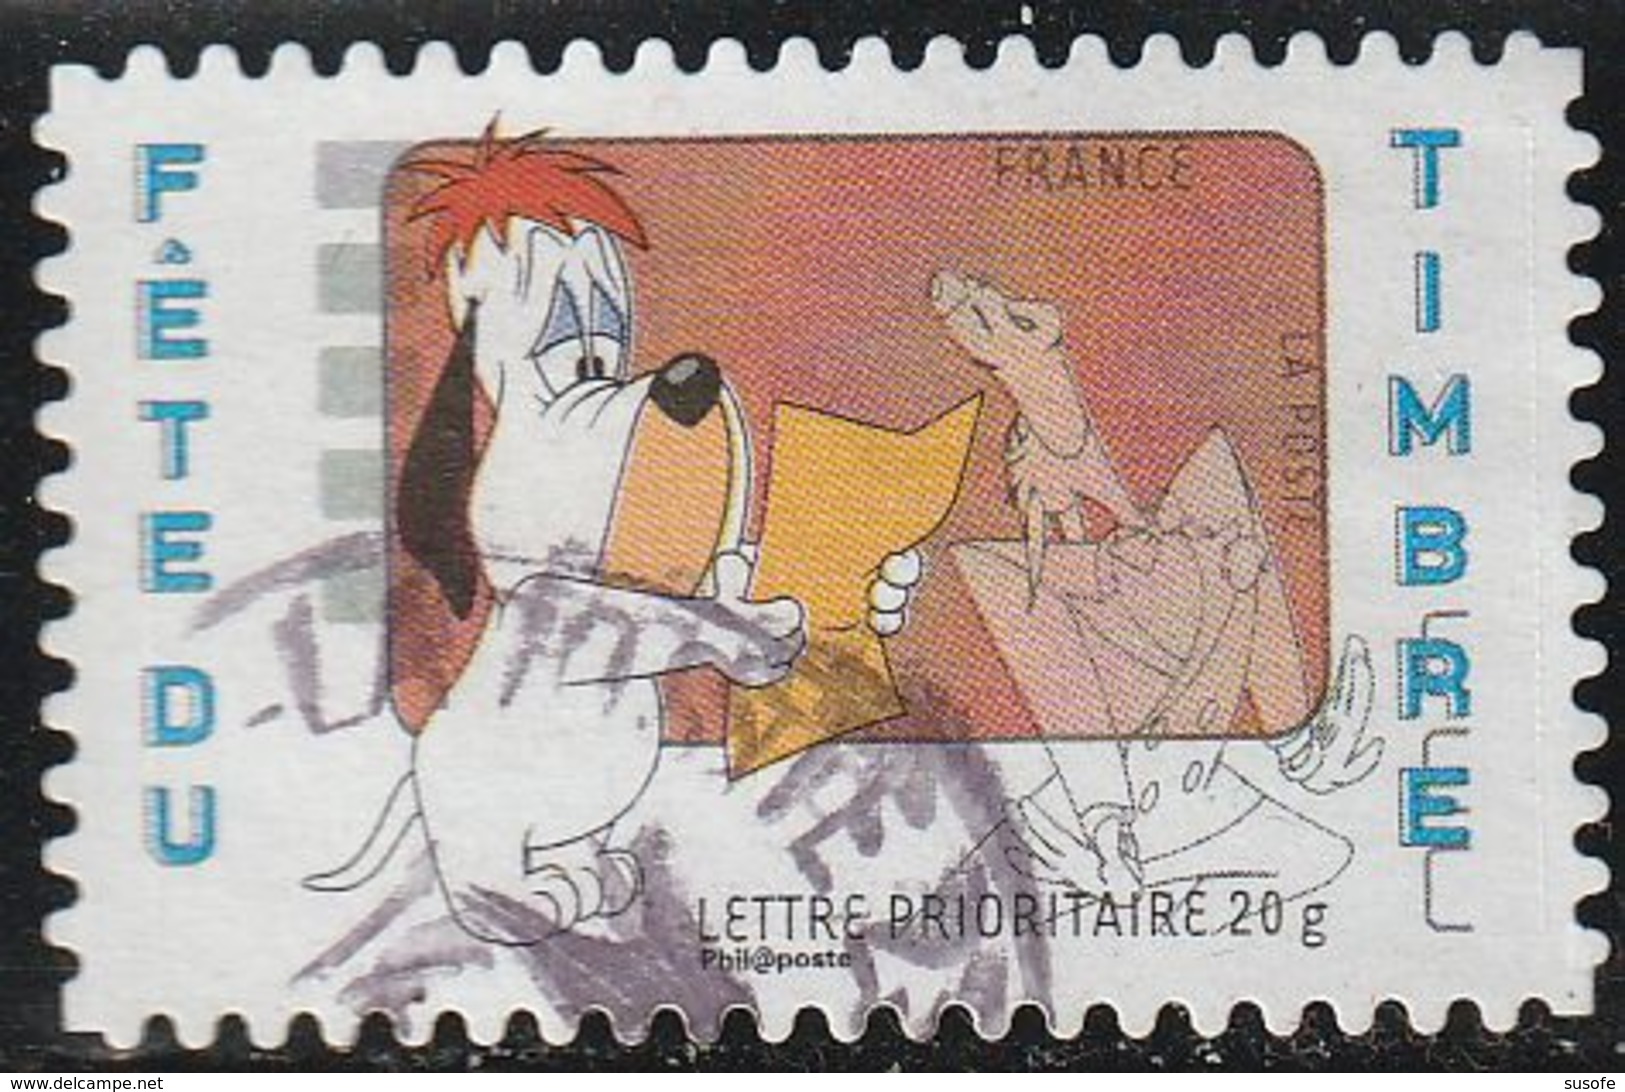 Francia 2008 Yvert 4149 Sello º Comics Droopy Y El Lobo France Stamps Timbre Frankreich Briefmarke Francobolli Ranska - Oblitérés